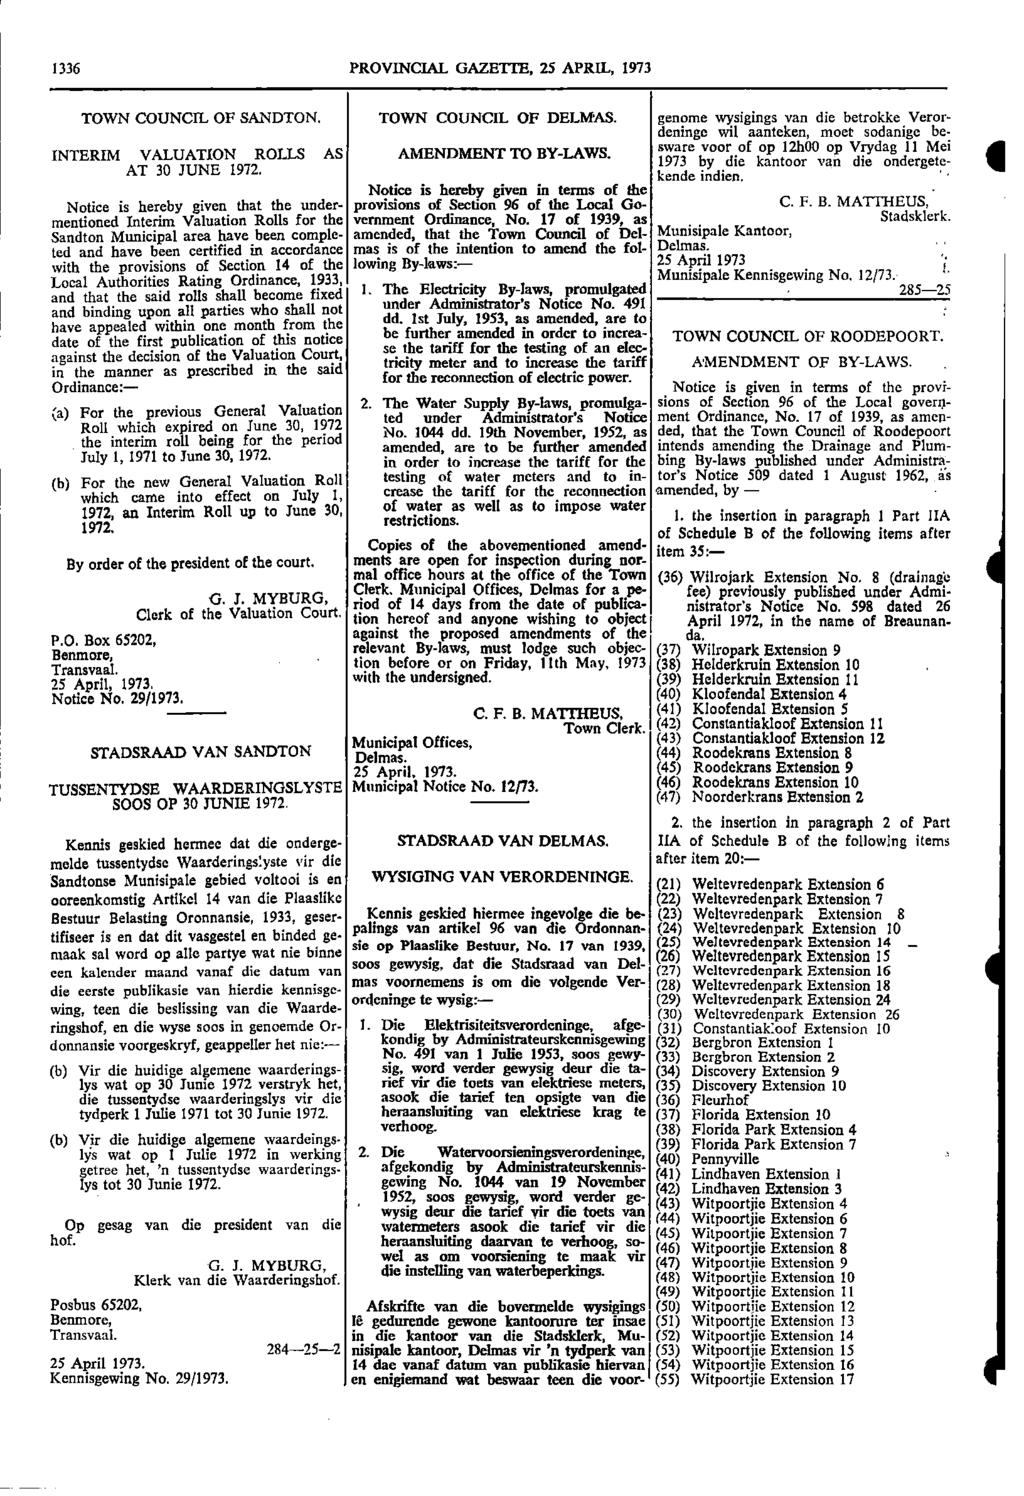 1336 PROVINCIAL GAZETTE 25 APRIL 1973 TOWN COUNCIL OF SANDTON TOWN COUNCIL OF DELMAS genome wysigings van die betrokke Veror deninge wit aanteken moet sodanige be sware INTERIM VALUATION ROLLS AS